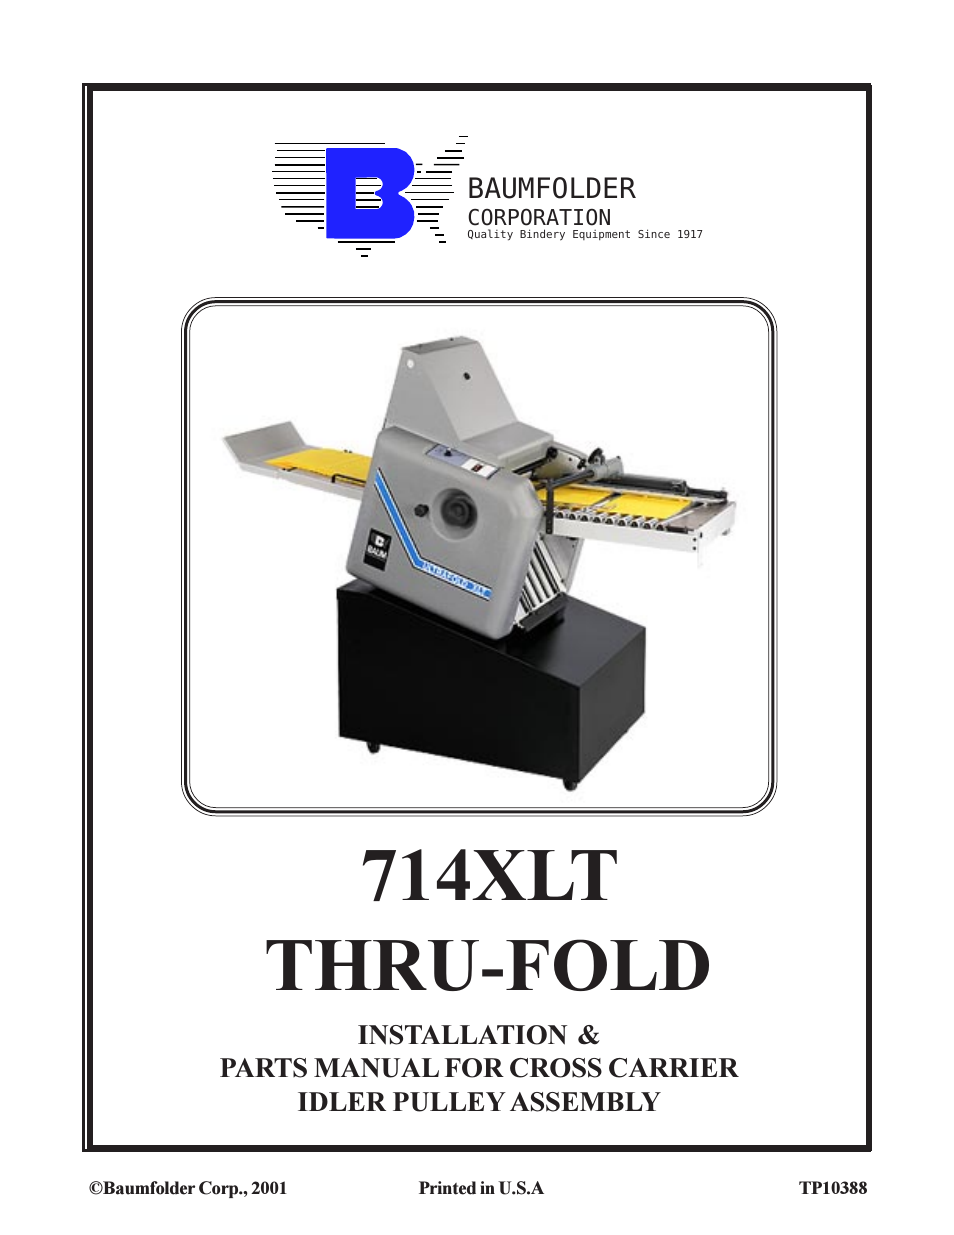 714XLT: Thrufold-Cross Carrier idler pulley assy Manual